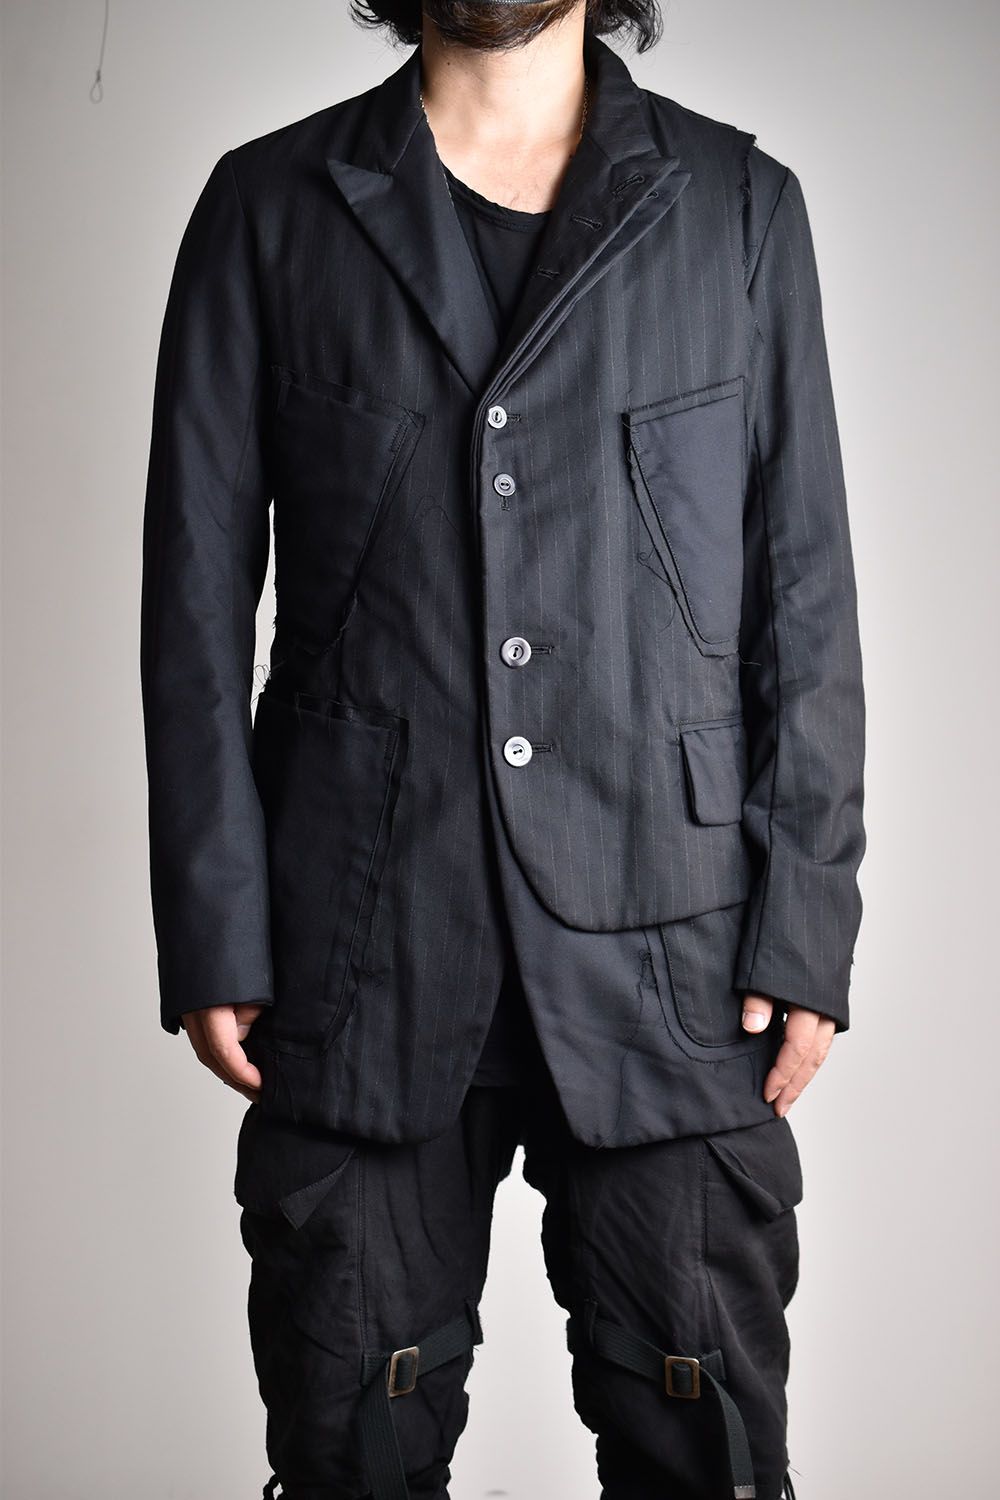 nude:masahiko maruyama - Patched Jacket W Half Vest